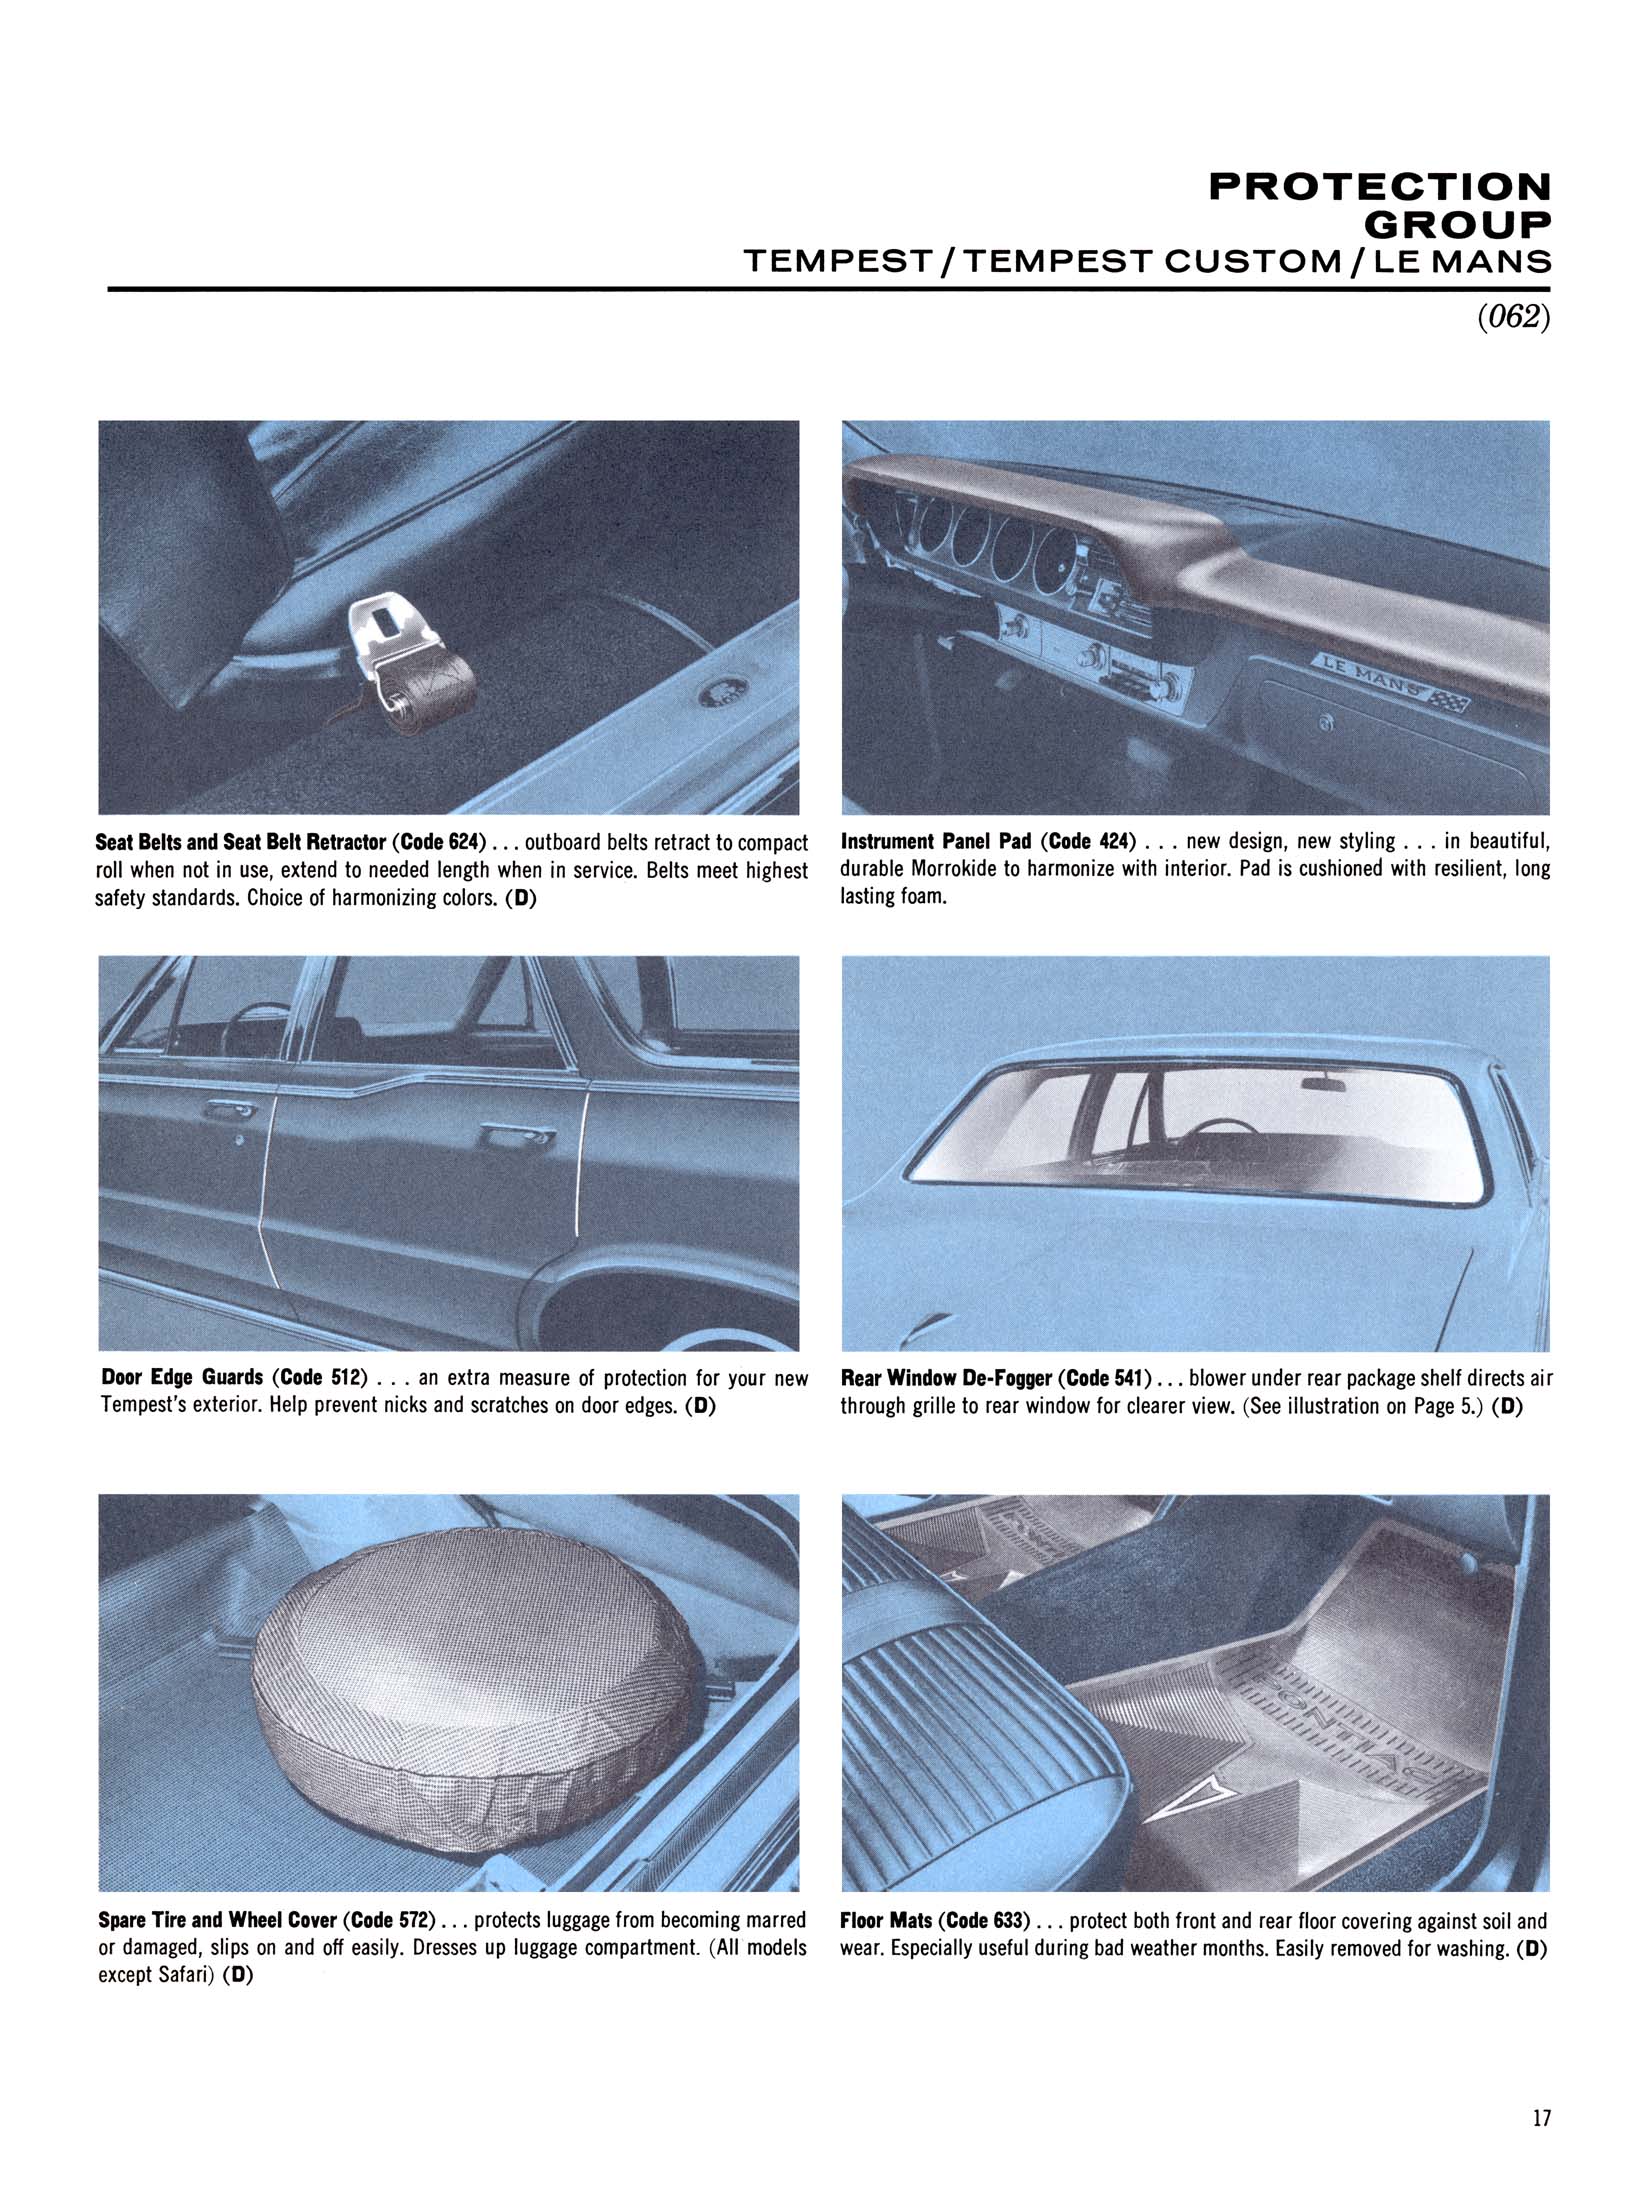 1964_Pontiac_Accessories-17